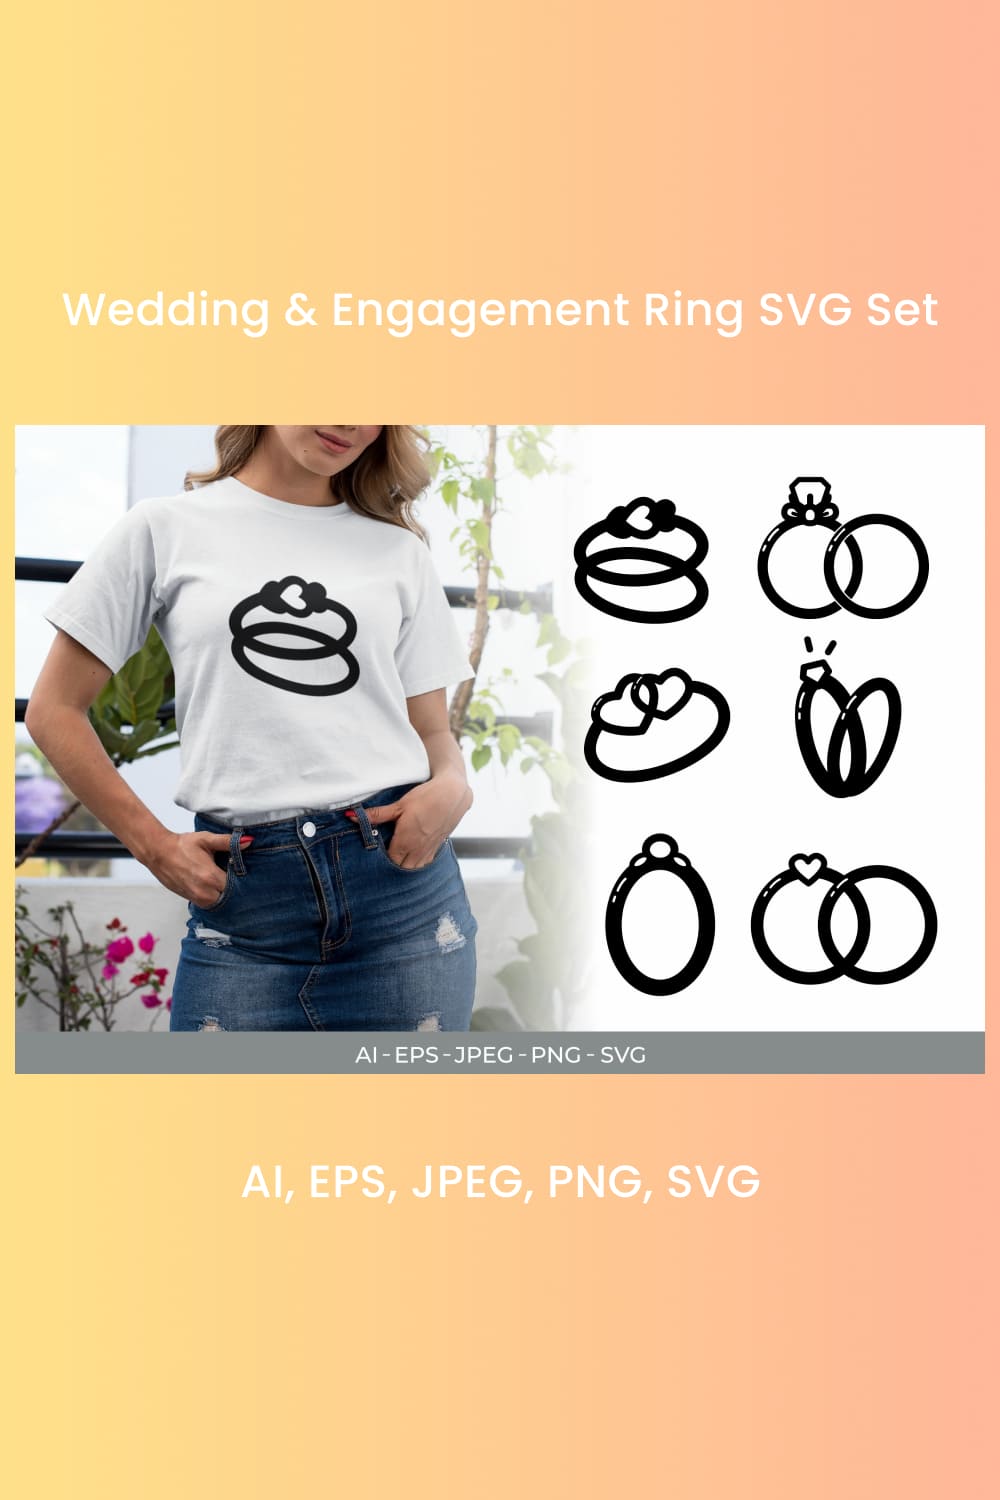 Wedding & Engagement Ring SVG Set.